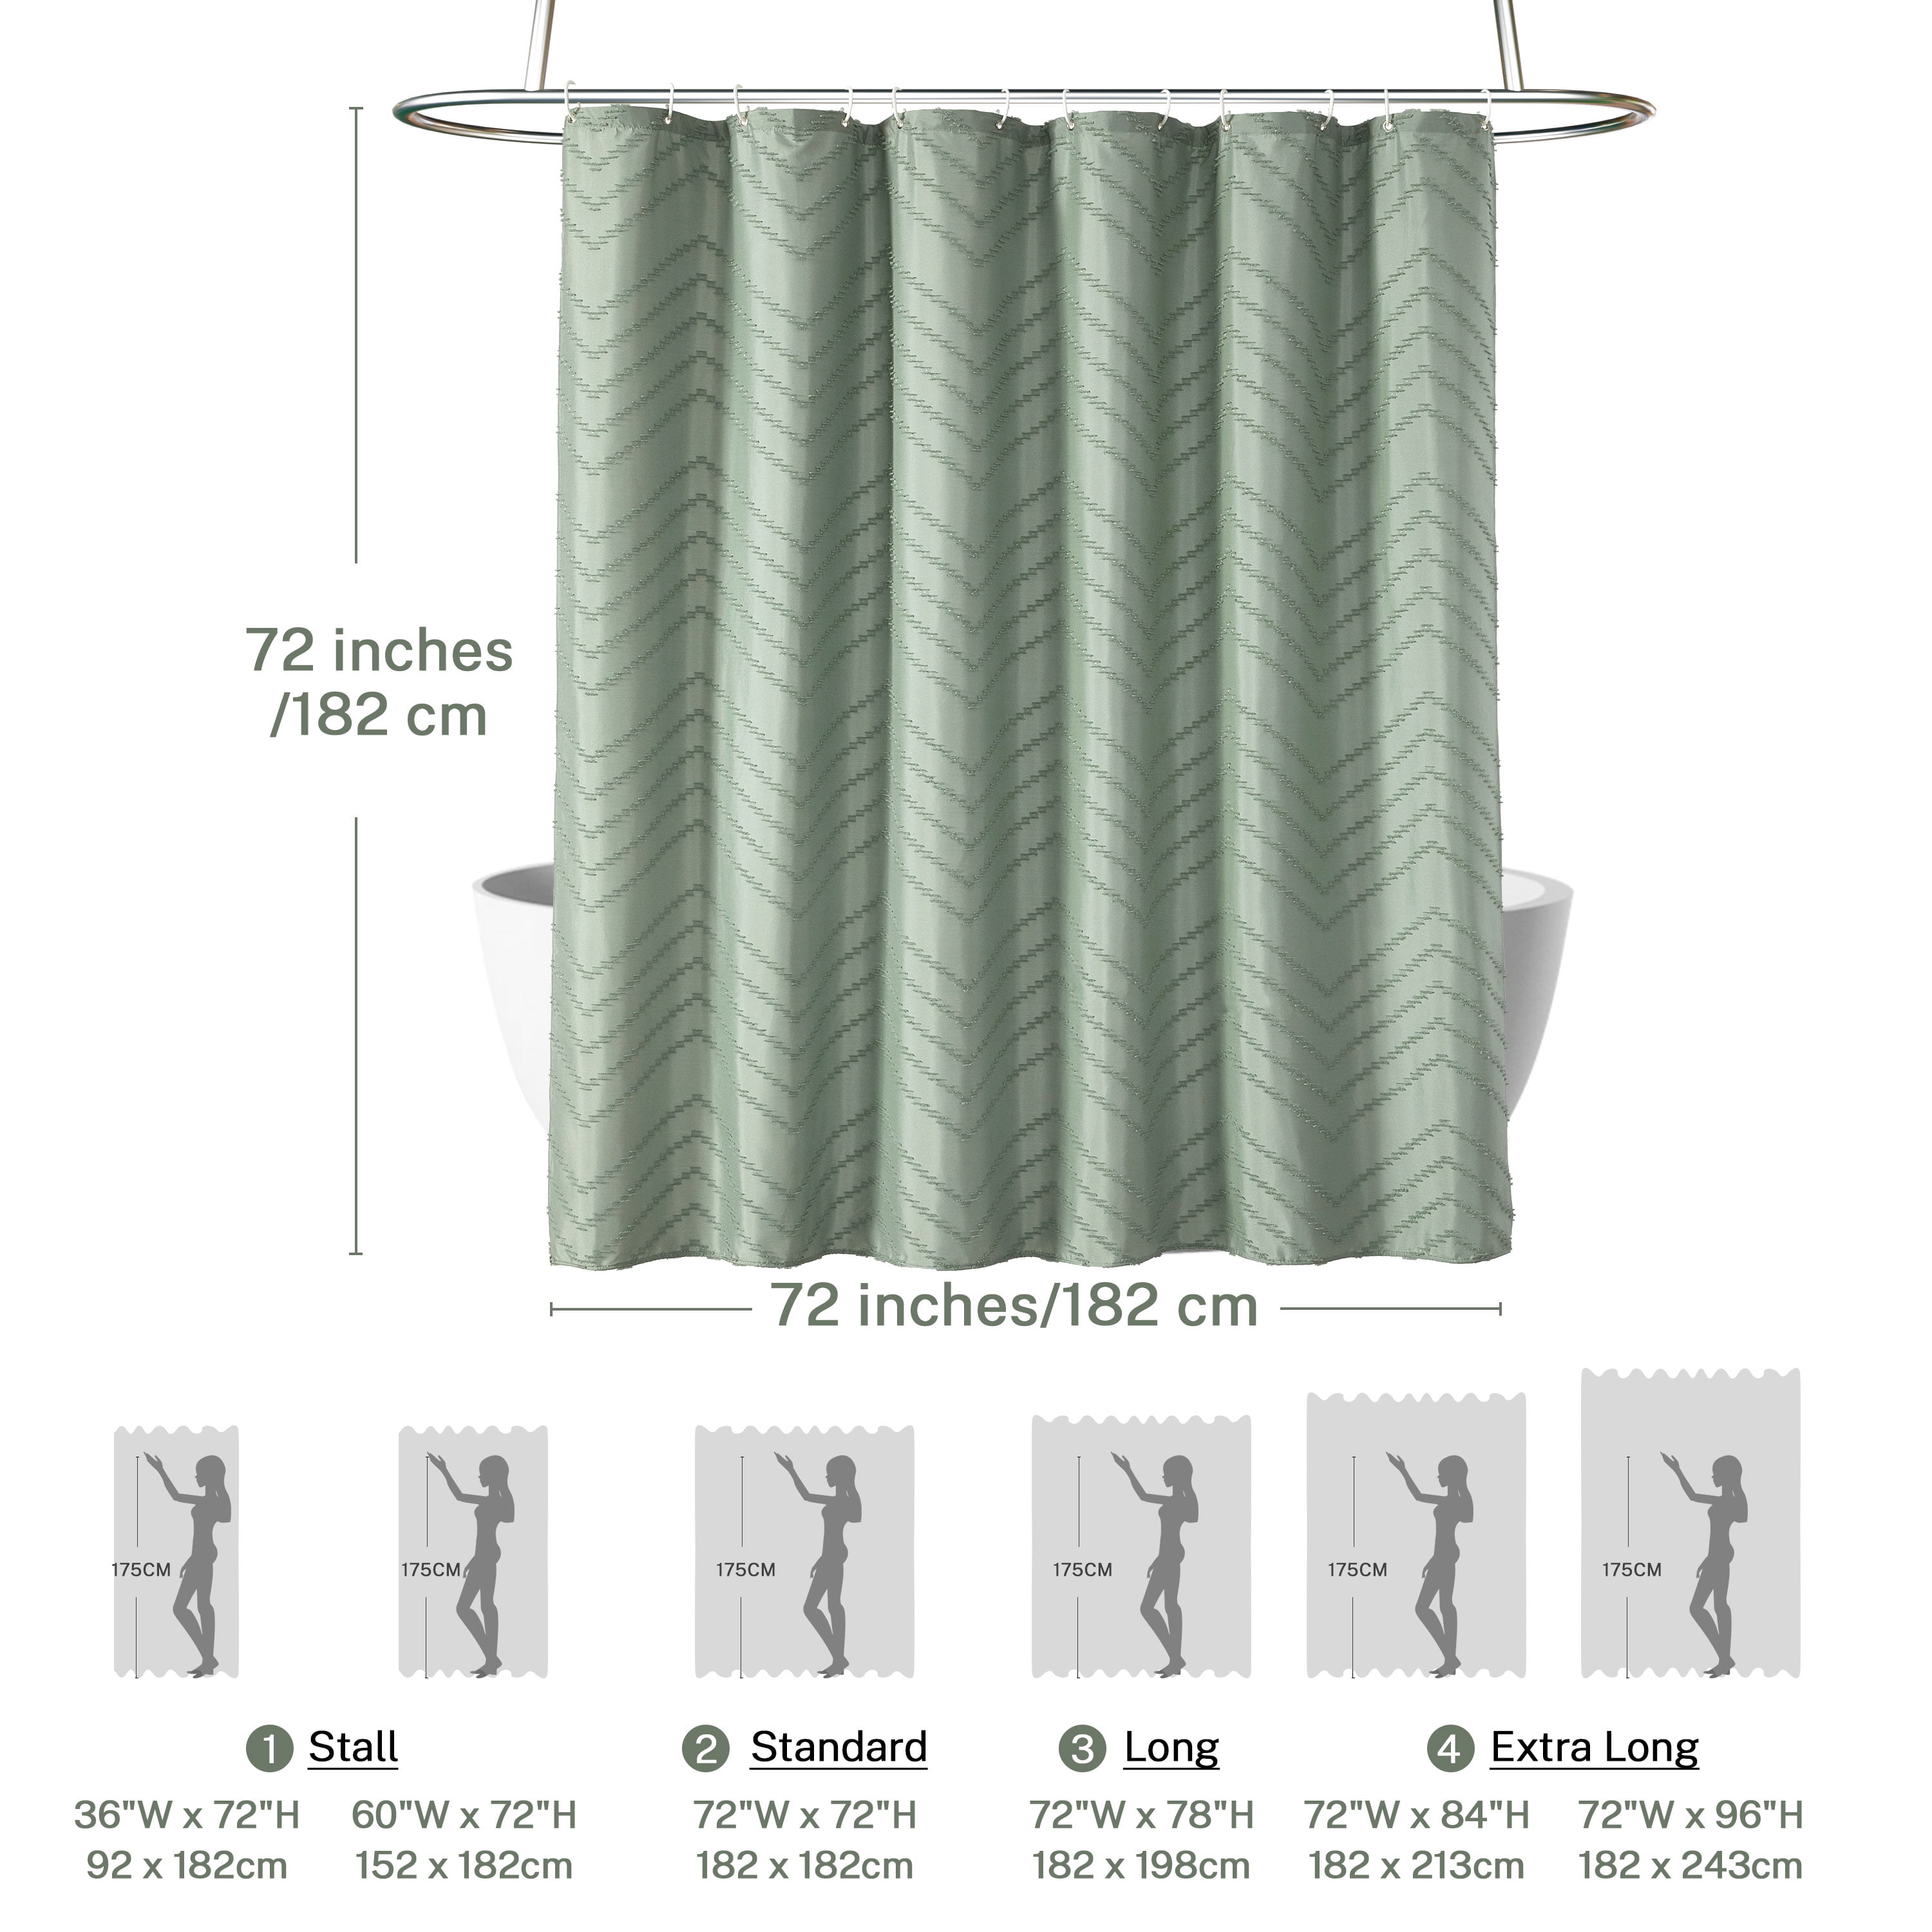 StyleWell 72 in. Charleston Green and White Chevron Shower Curtain